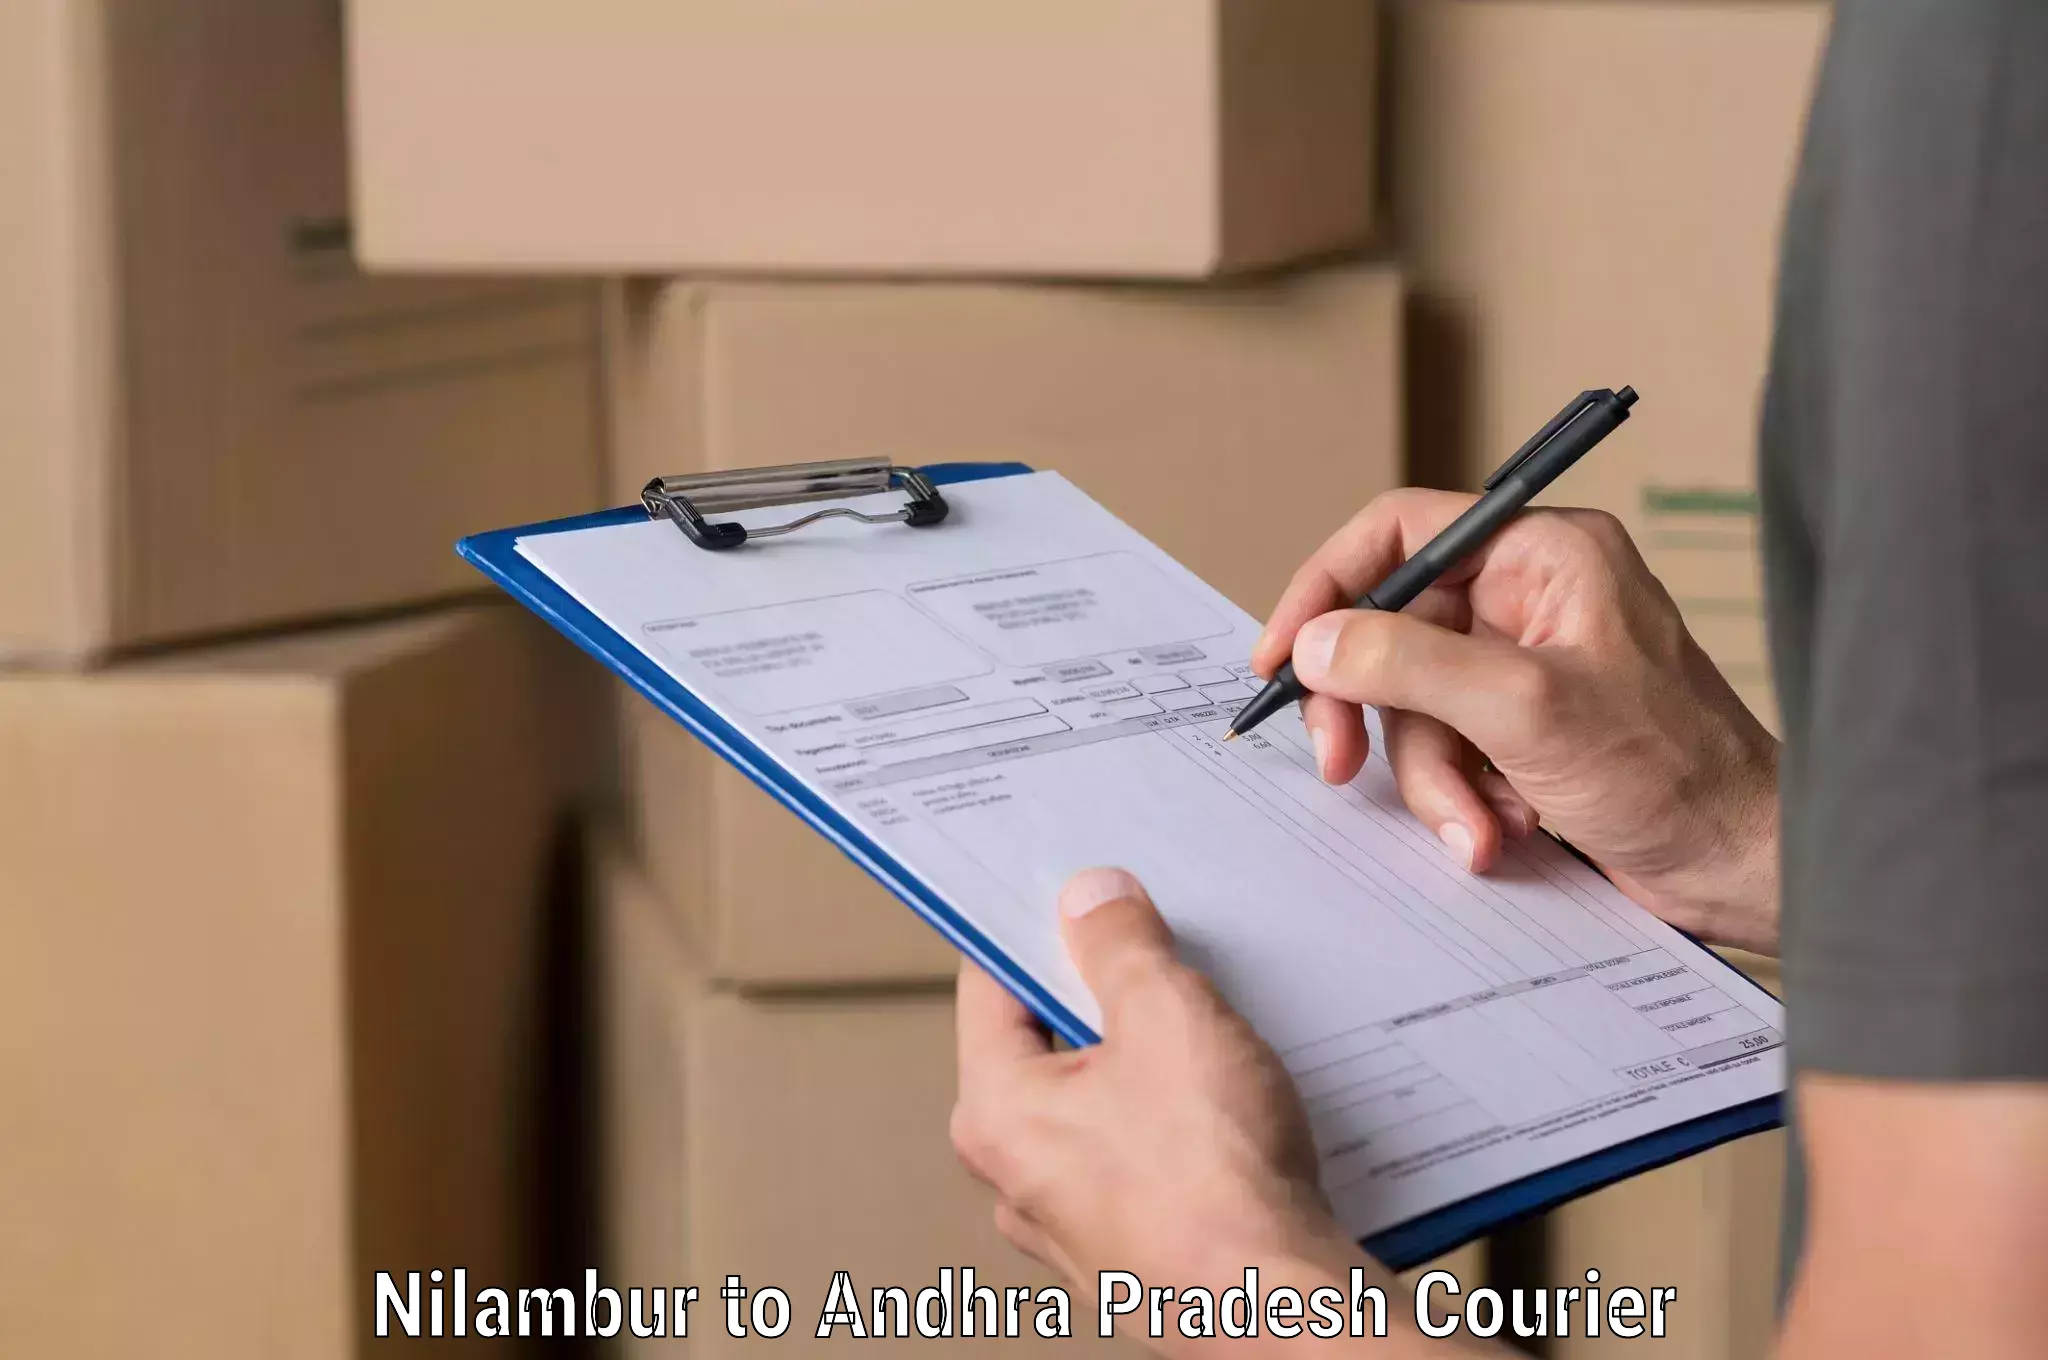 Reliable logistics providers Nilambur to Visakhapatnam Port